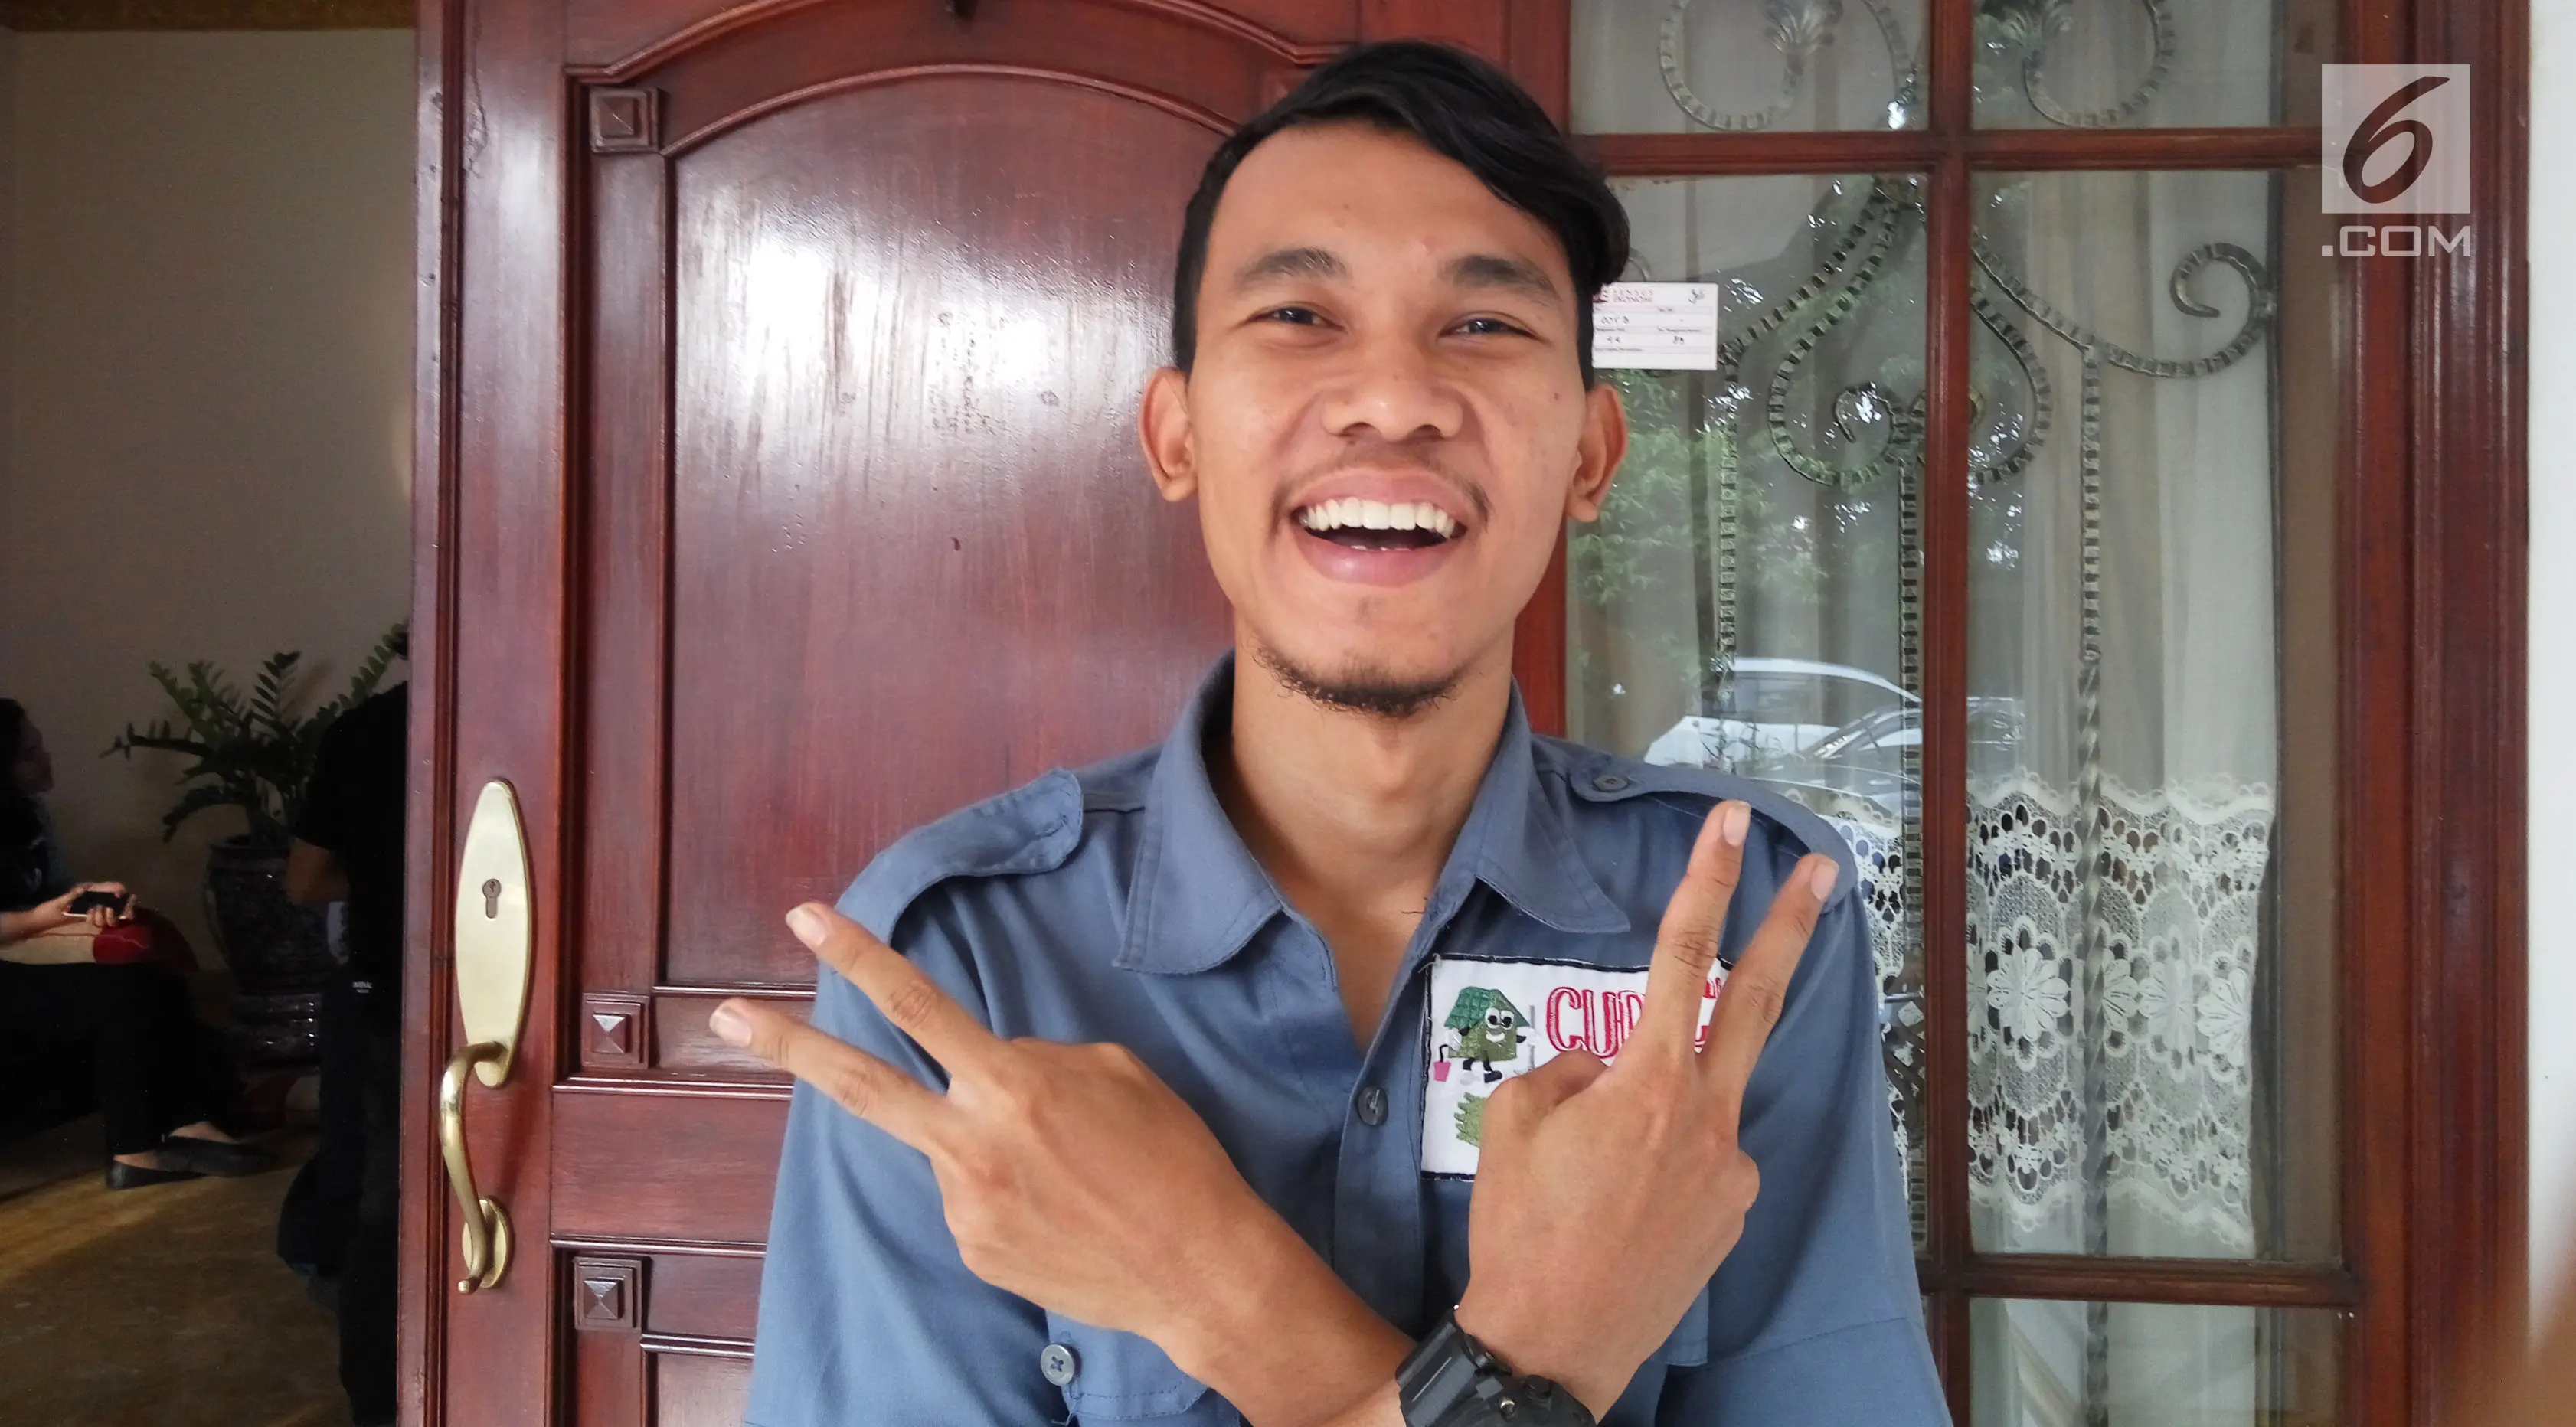 Juara Stand Up Comedy Academy Indosiar, Cemen